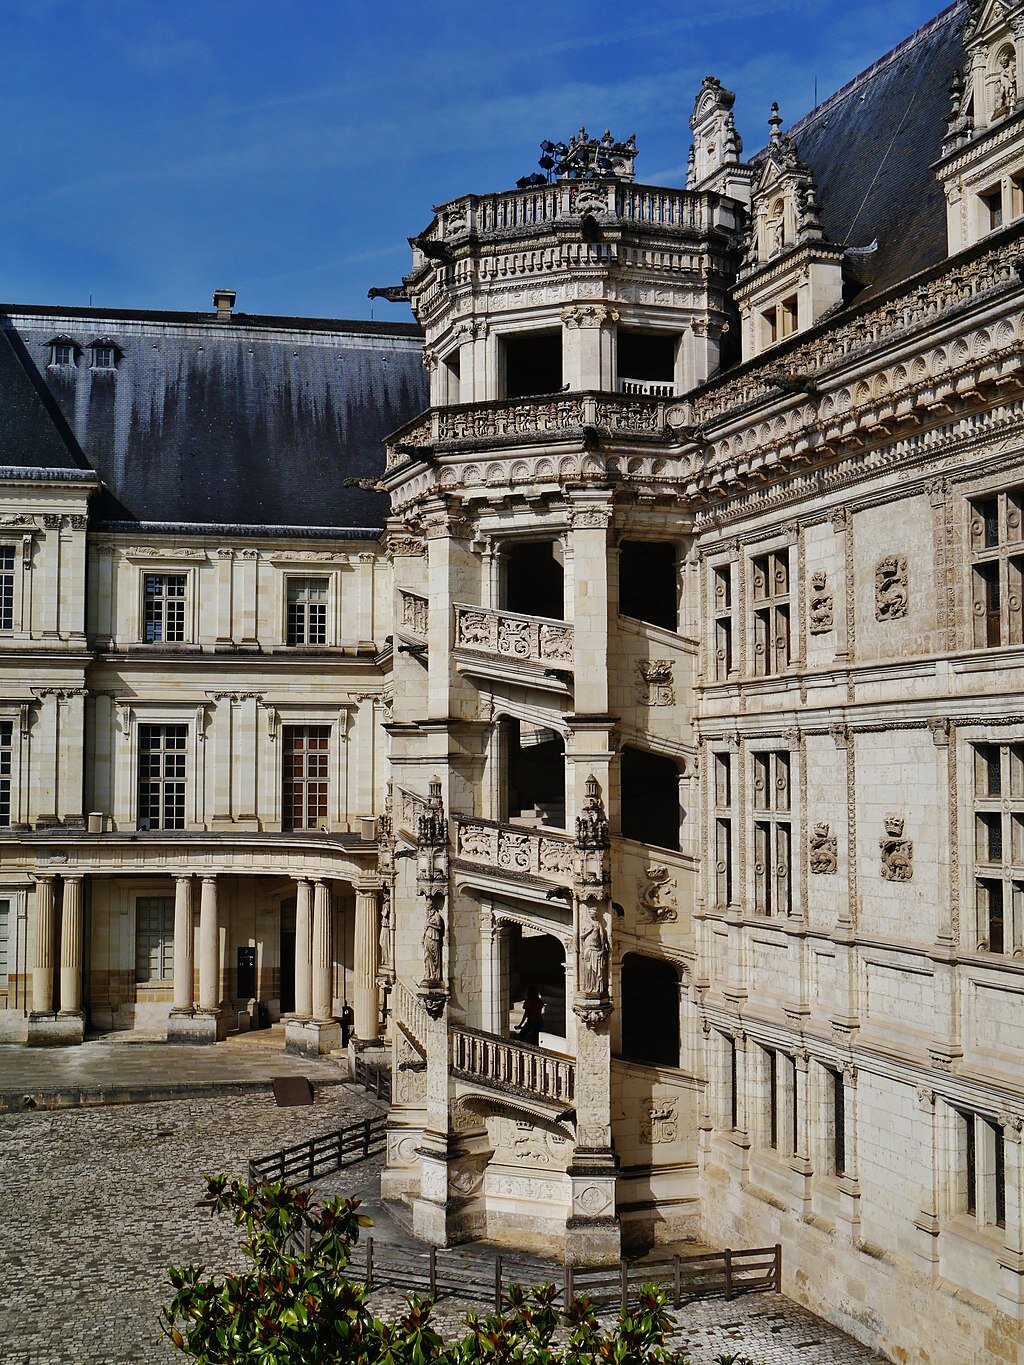 Chateau de Blois Spiral Staircase